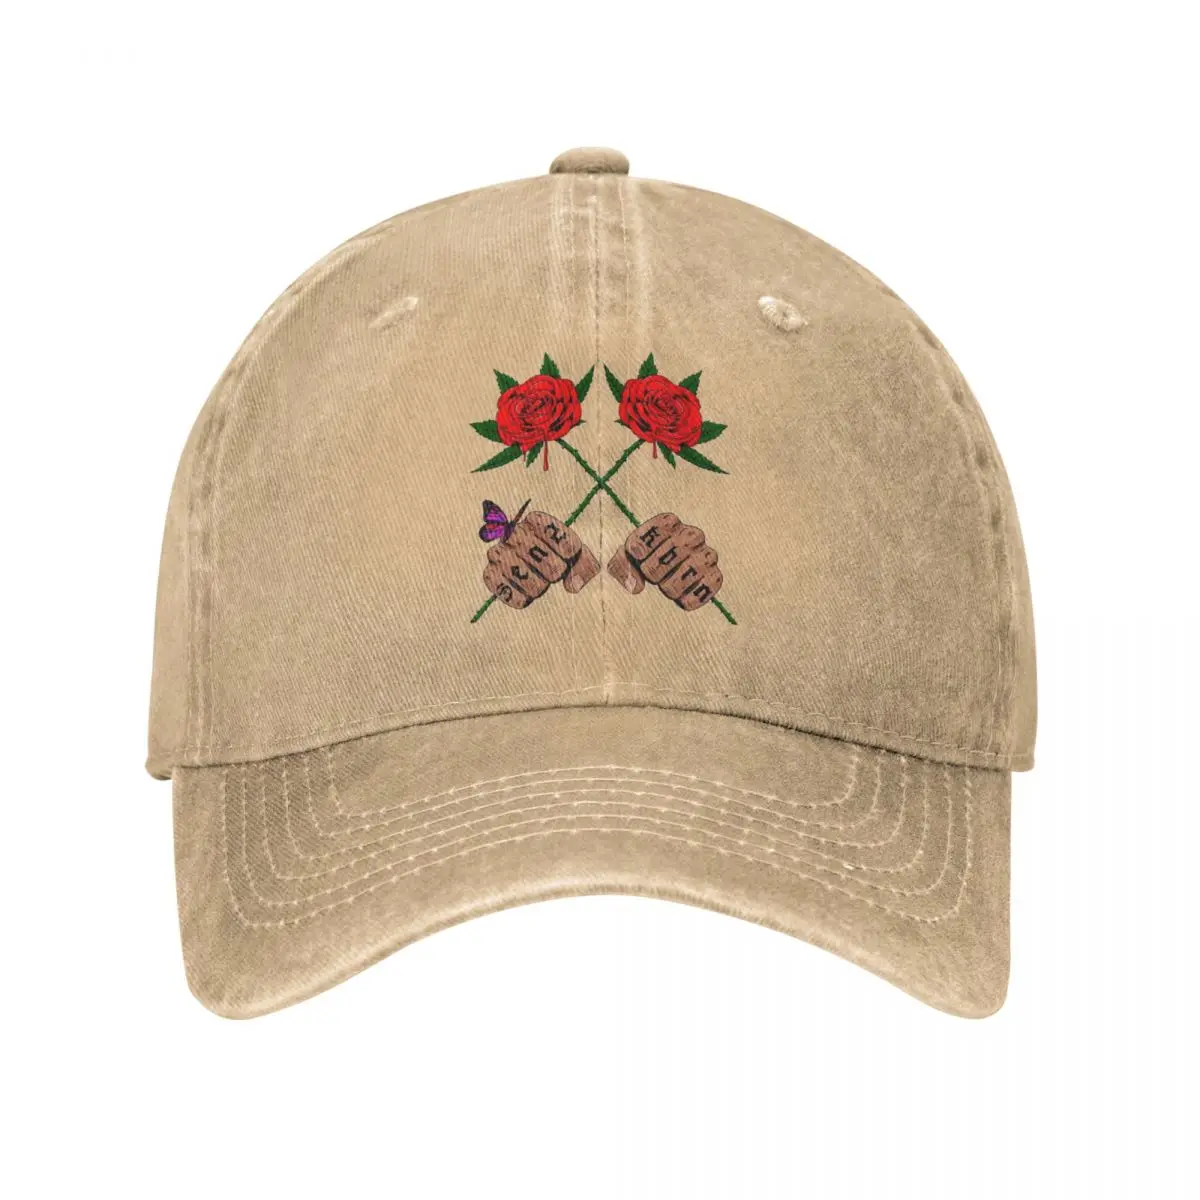 

Vintage Eladio Carrion Sauce Boyz Rose Baseball Caps for Men Women Distressed Washed Sun Cap Outdoor Workouts Caps Hat